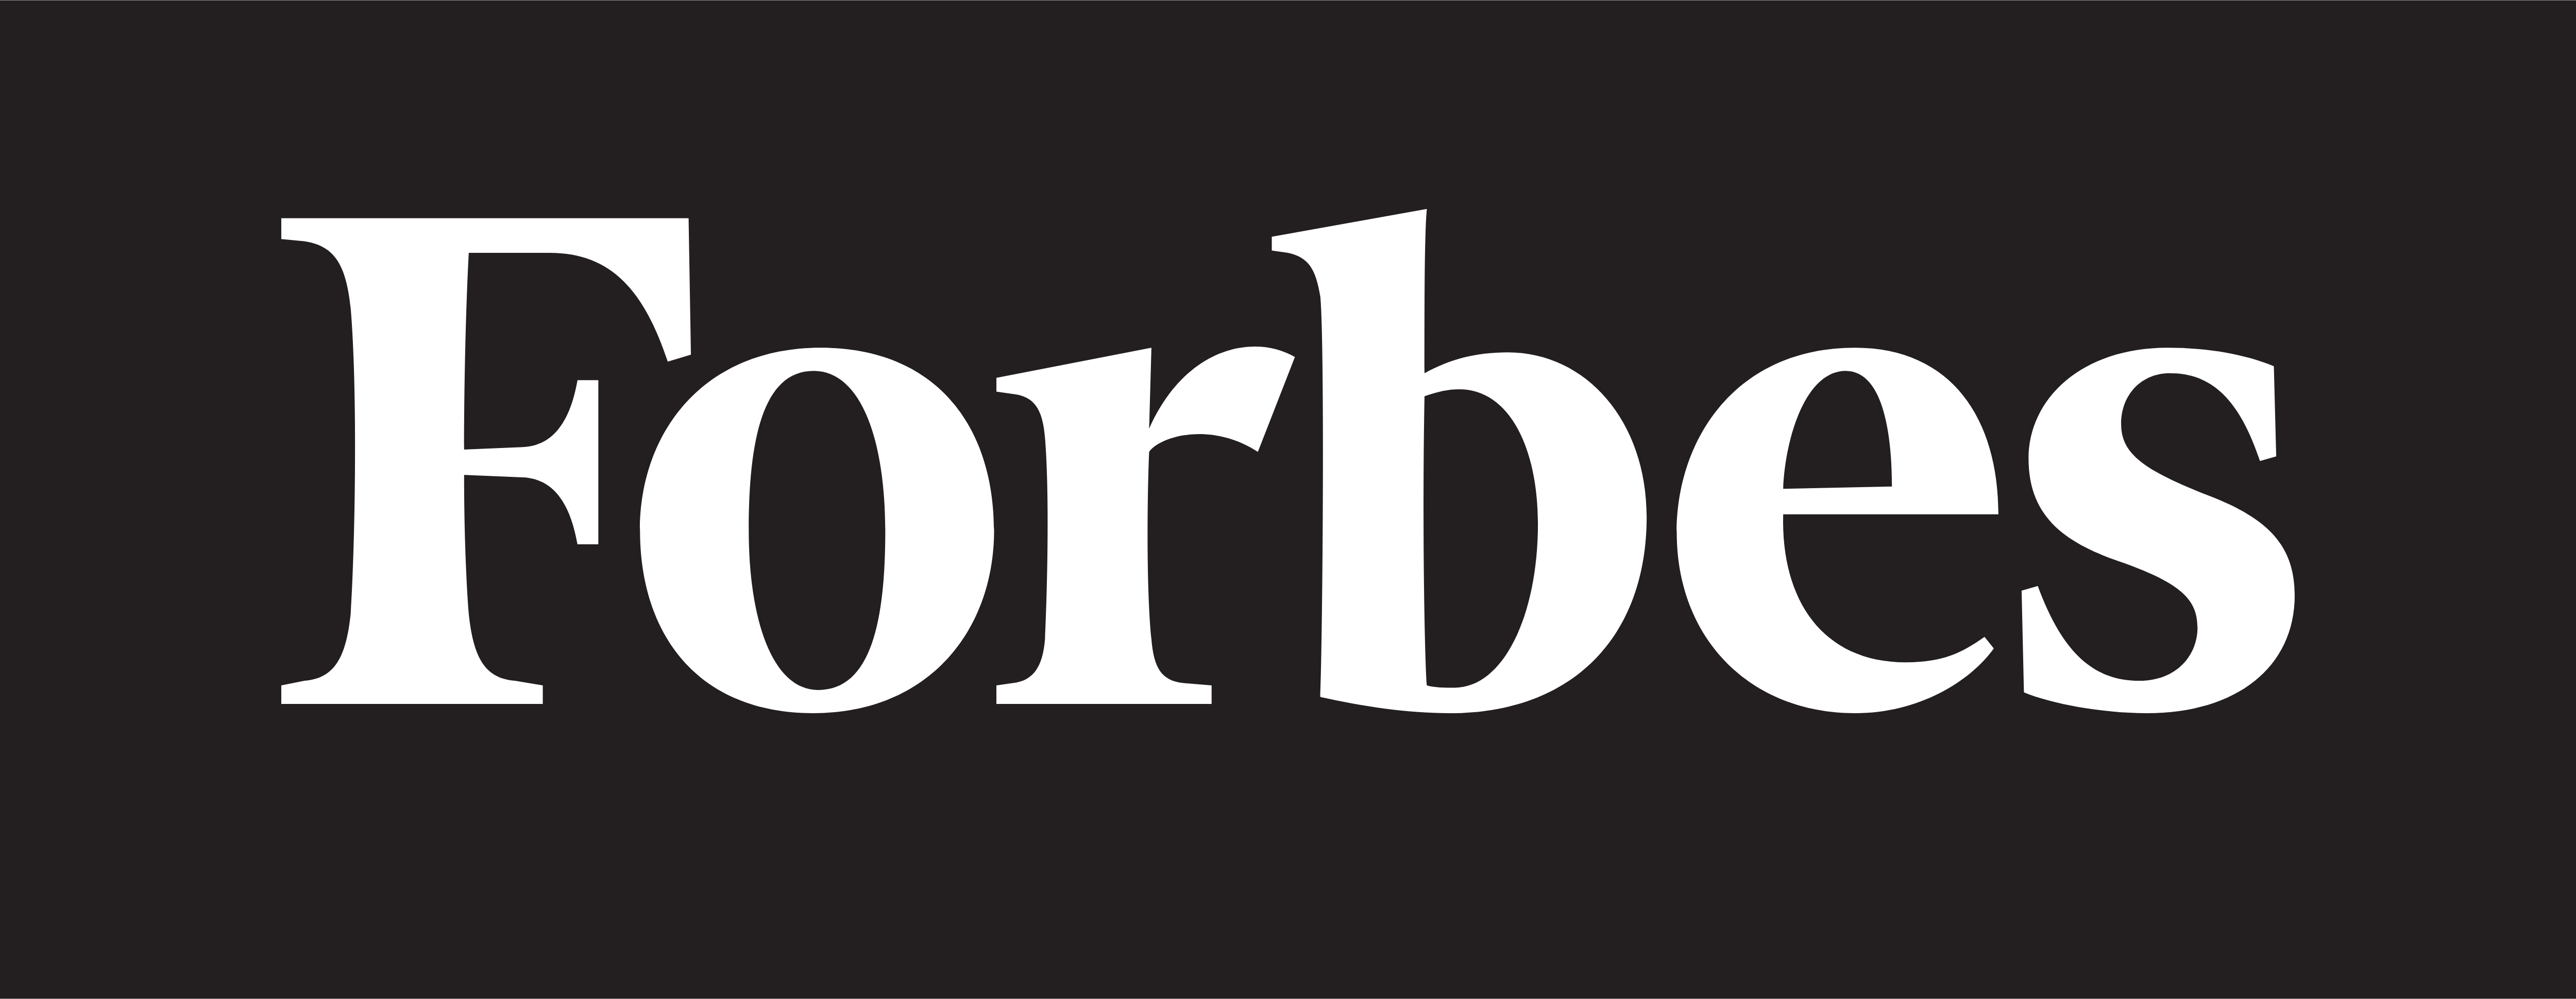 Forbes – Logos herunterladen